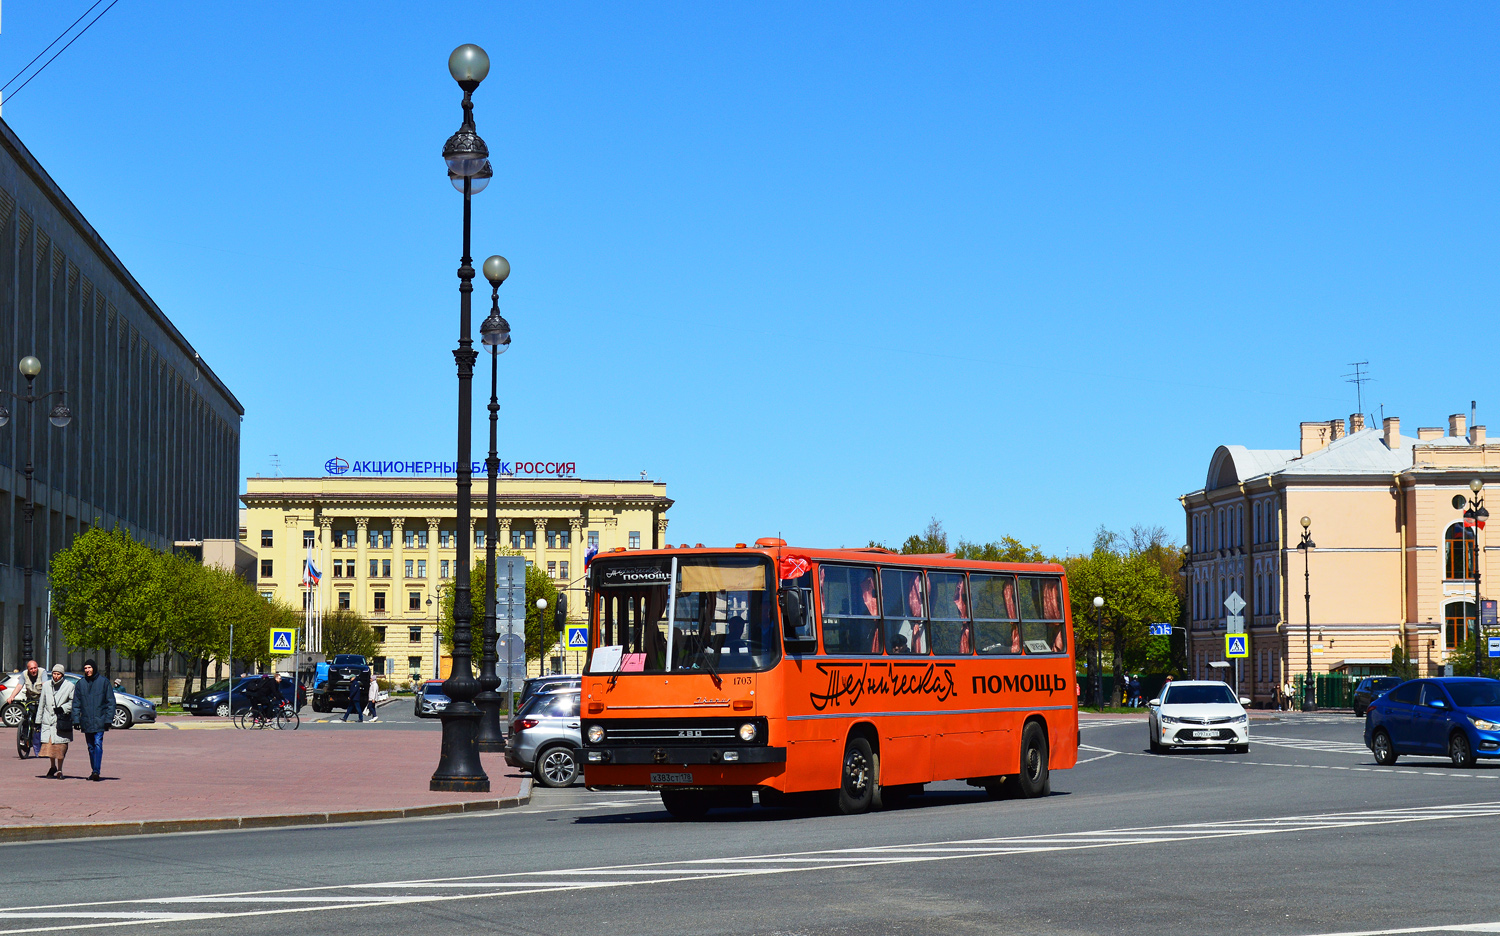 Sanktpēterburga, Ikarus 280.33 № 1703; Sanktpēterburga — III International Transport Festival "SPbTransportFest-2022"